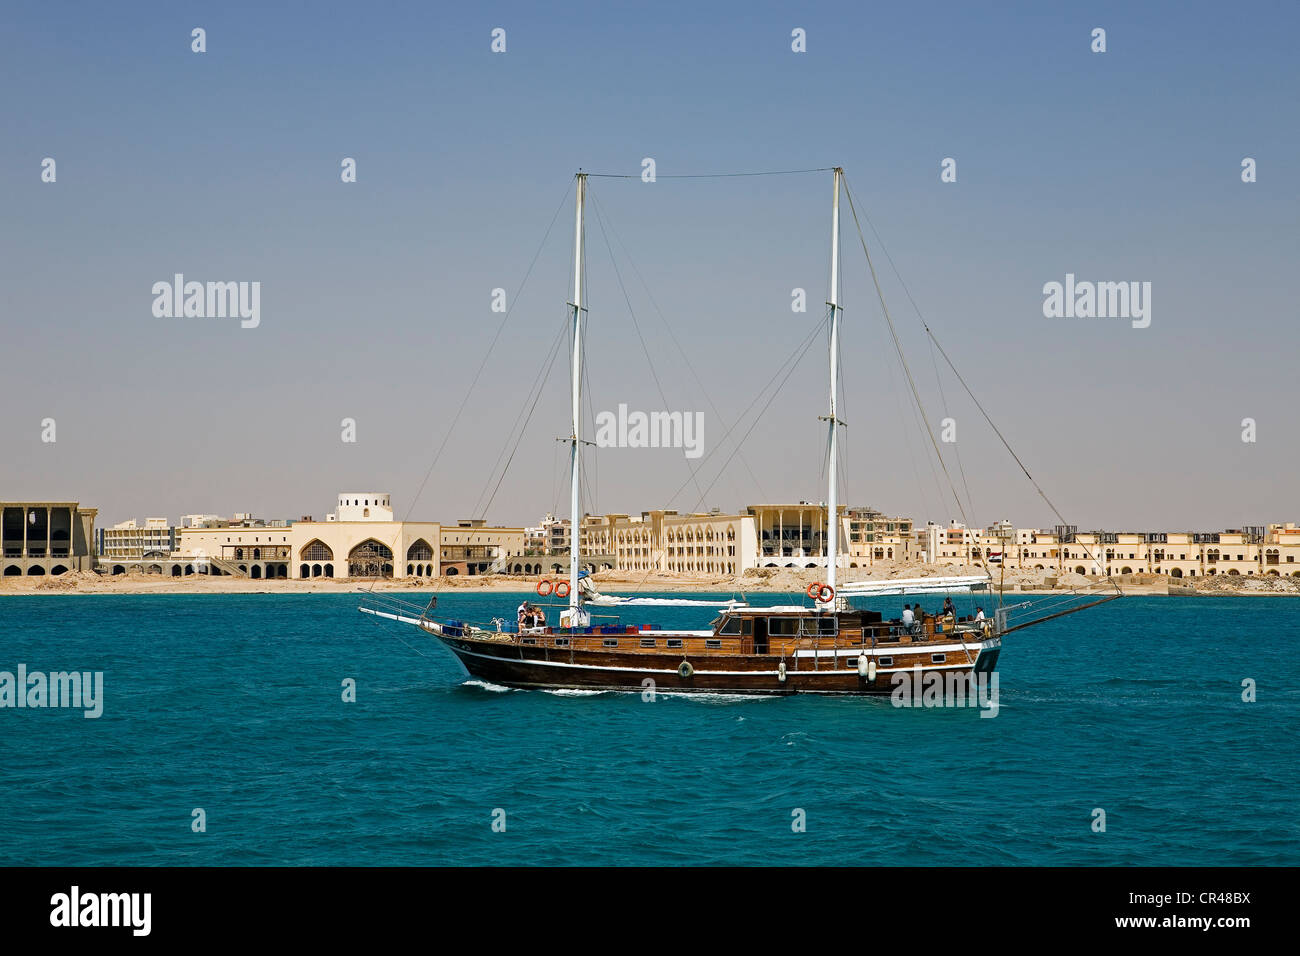 Egypt, Red Sea, Hurghada, boat off the coasts Stock Photo